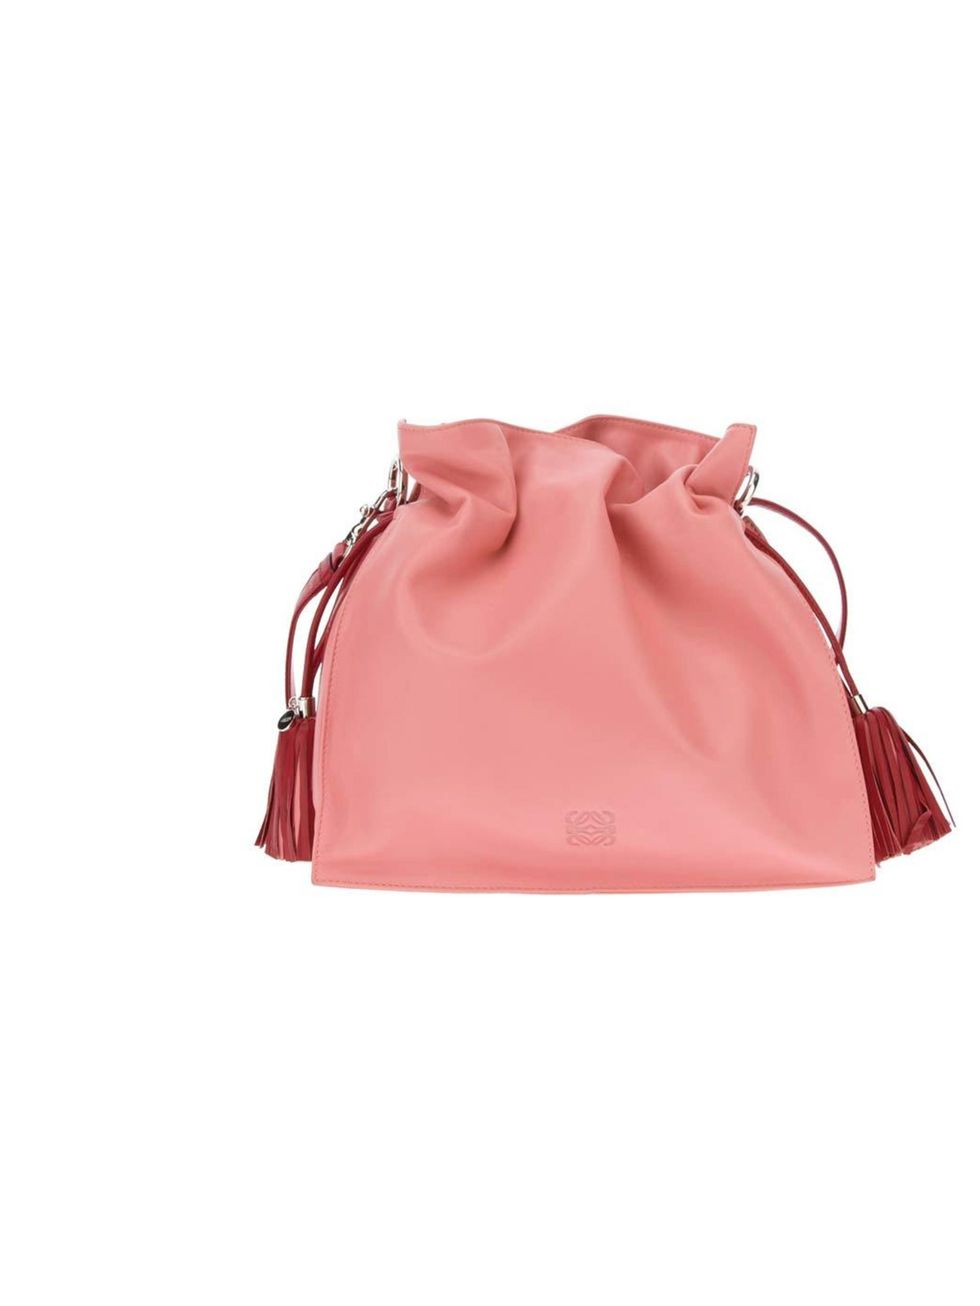 <p>Loewe leather bag, £1260 at Farfetch.com</p>